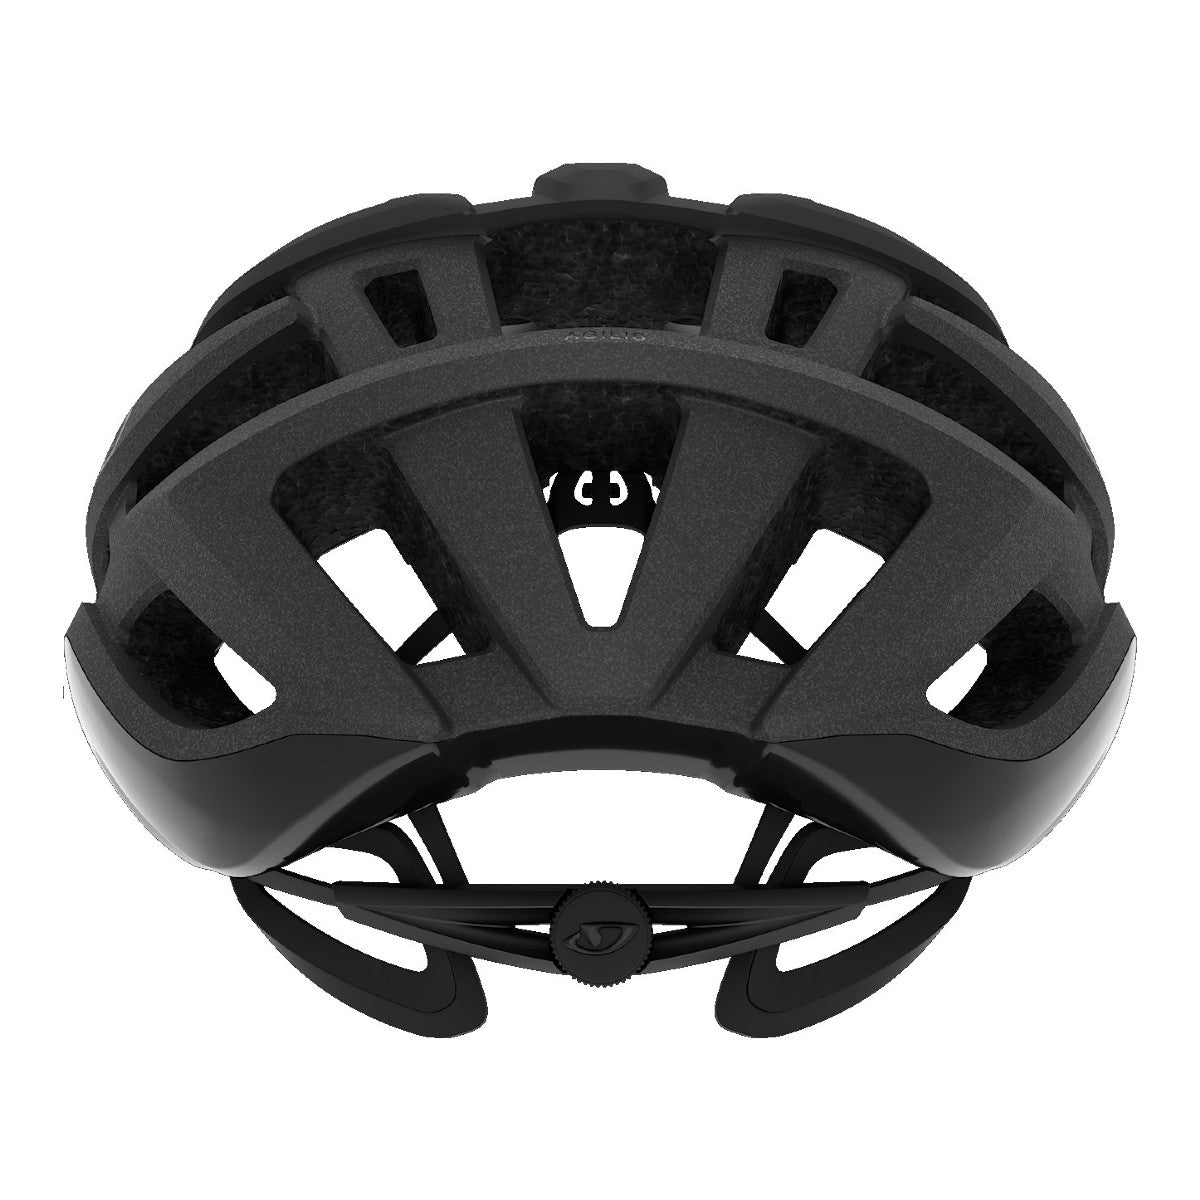 Giro Agilis Bike Helmet - Matte Black (Non-MIPS)